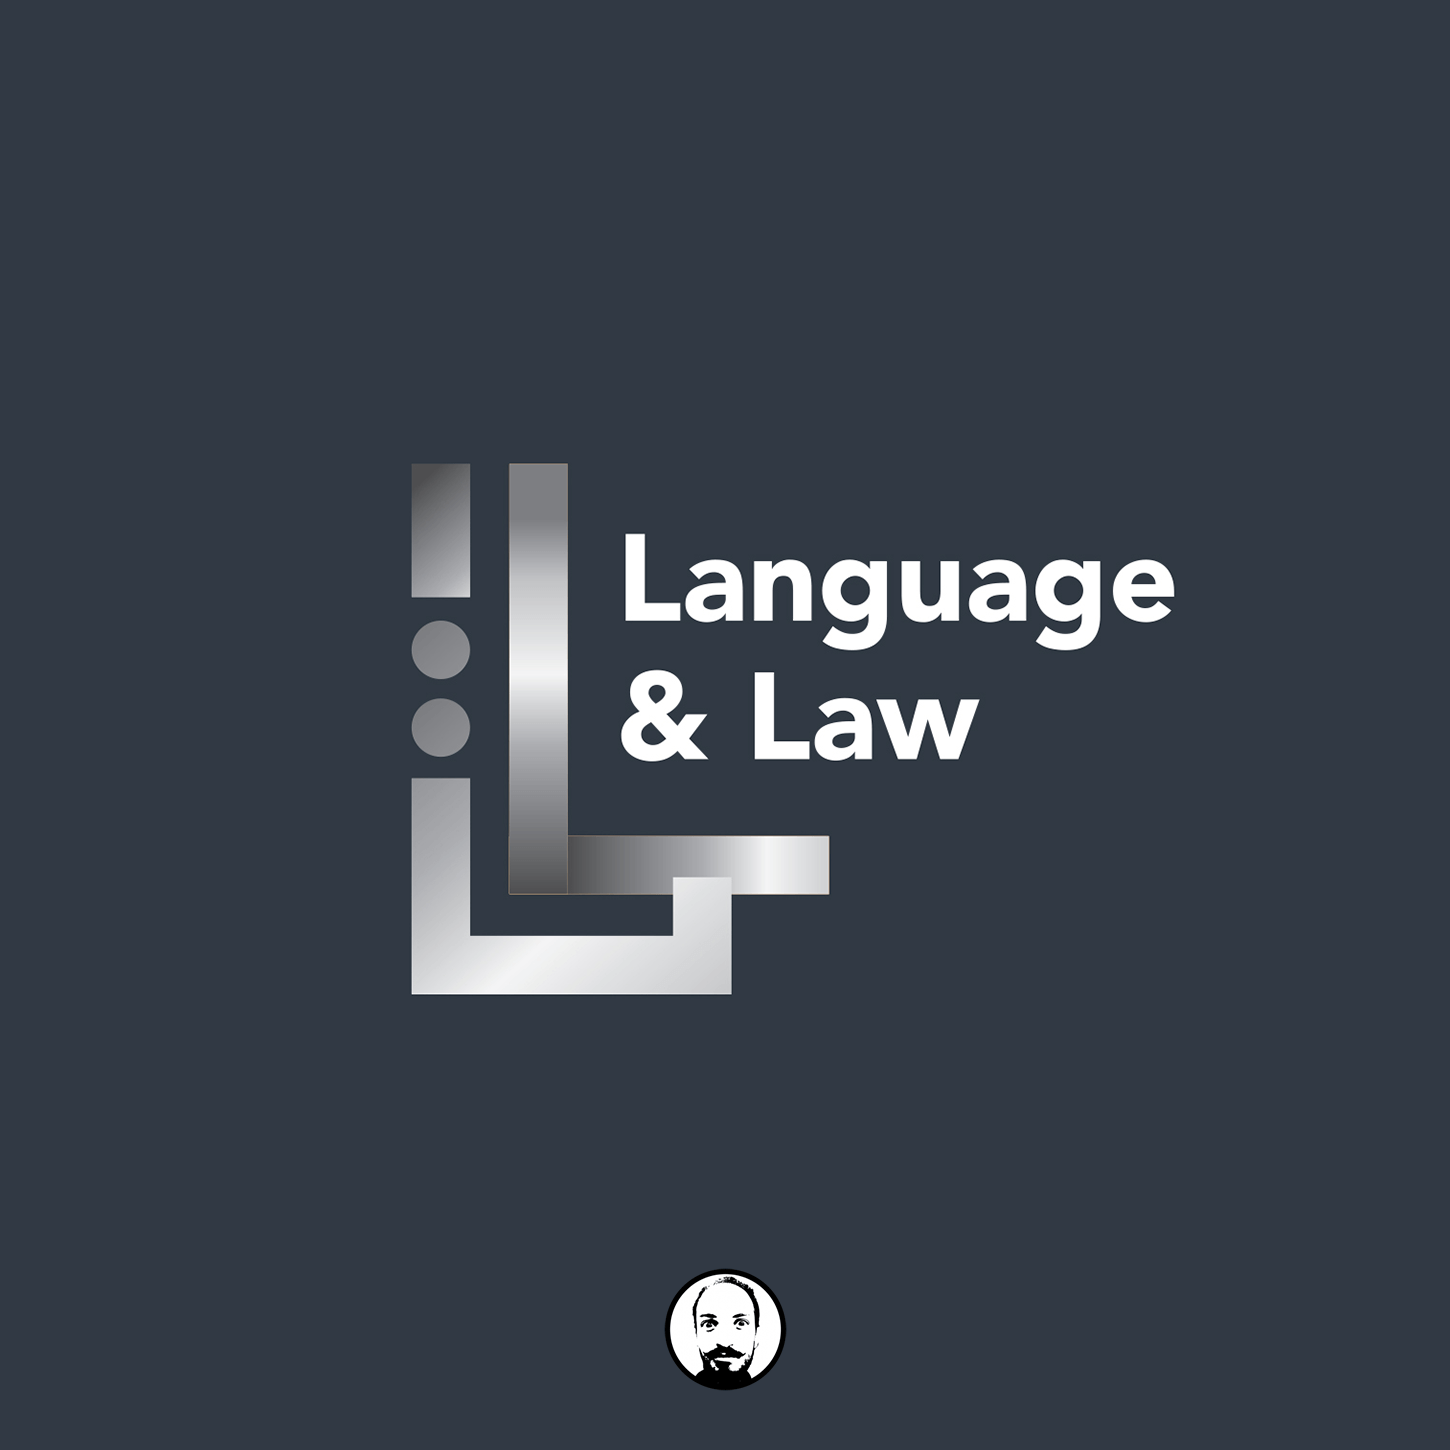 language and law logo design